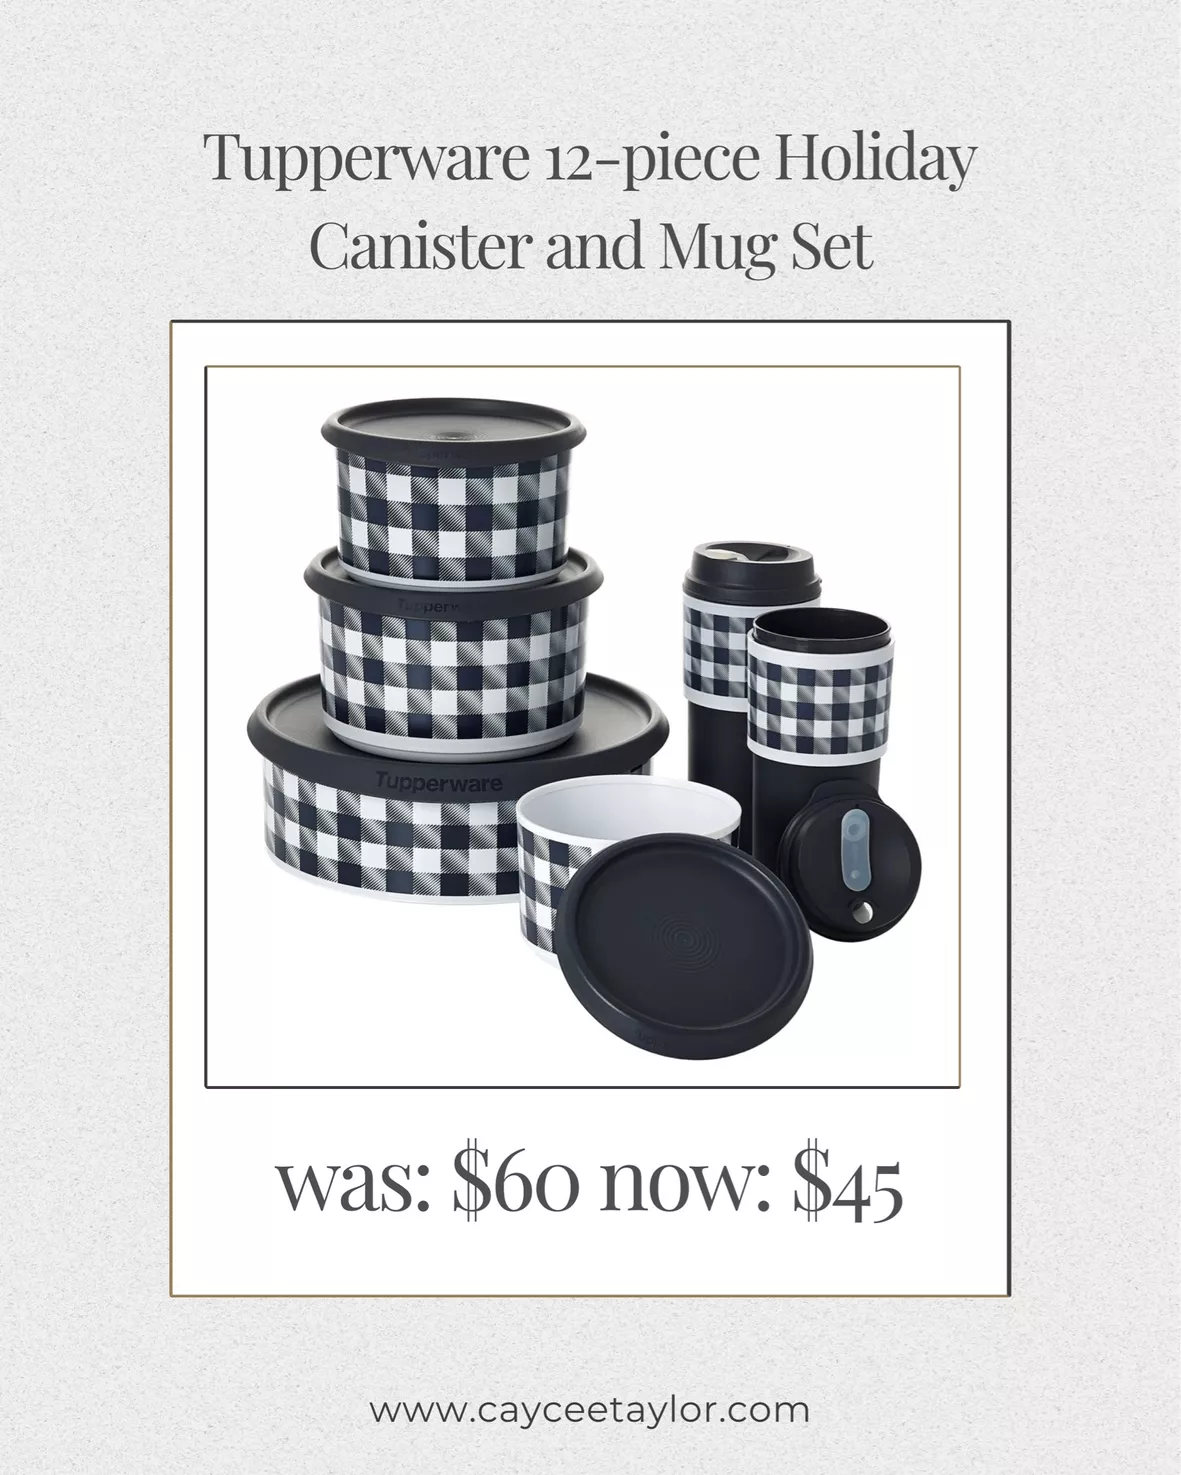 Tupperware 12-piece Holiday Canister and Mug Set - 21770985